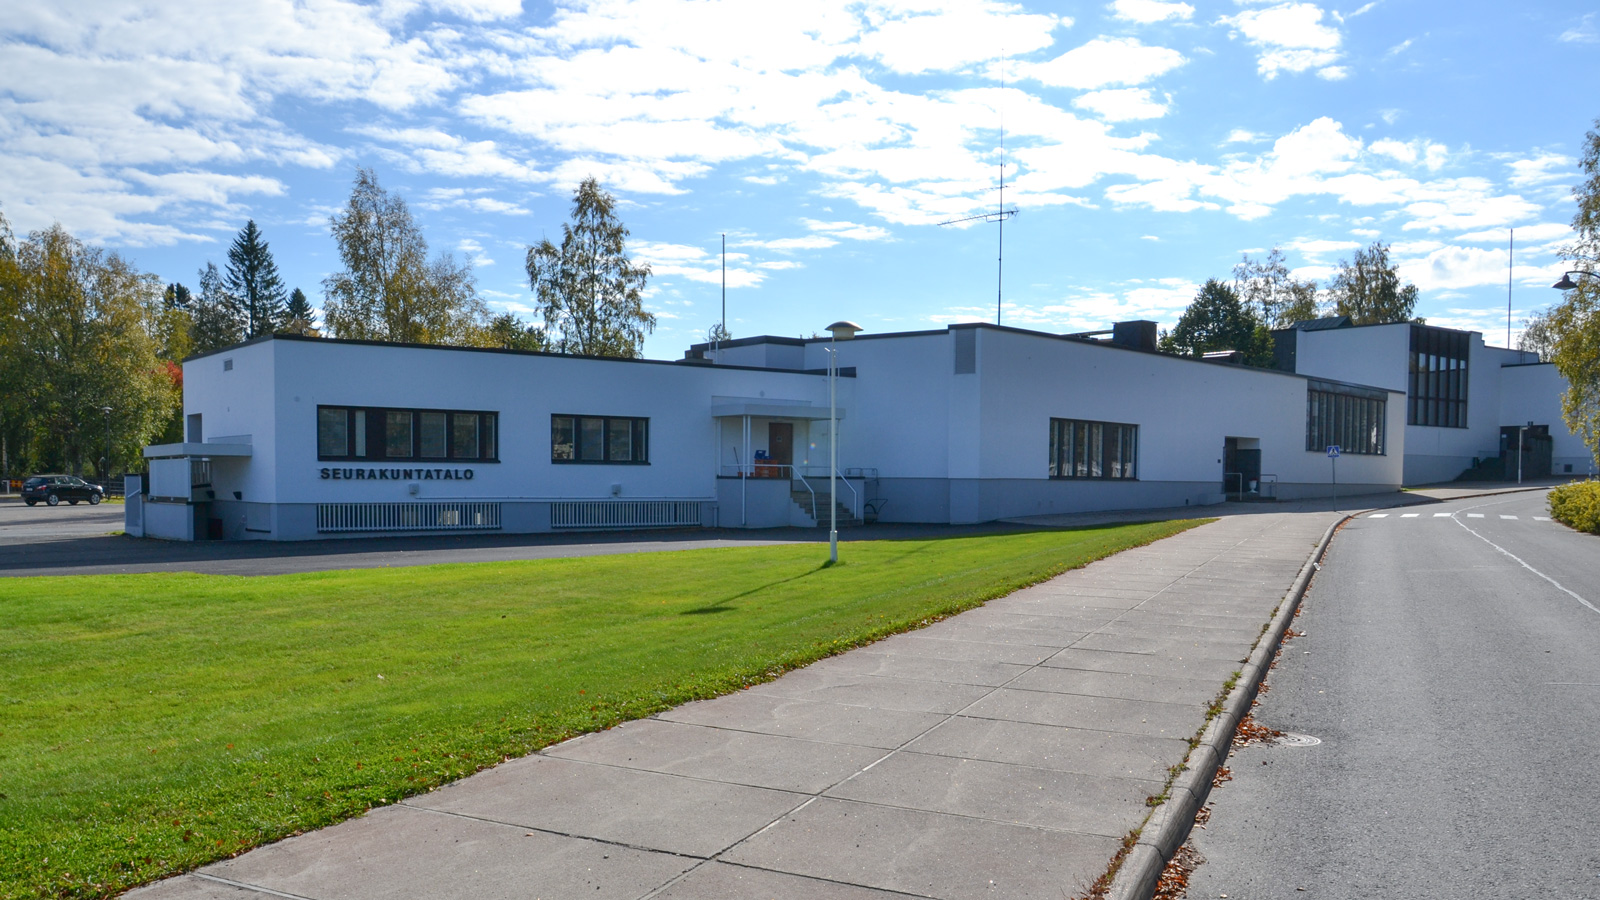 Alajärven seurakuntatalo - Alvar-Aalto - Arkkitehtitoimisto Tuomela, Alajärvi